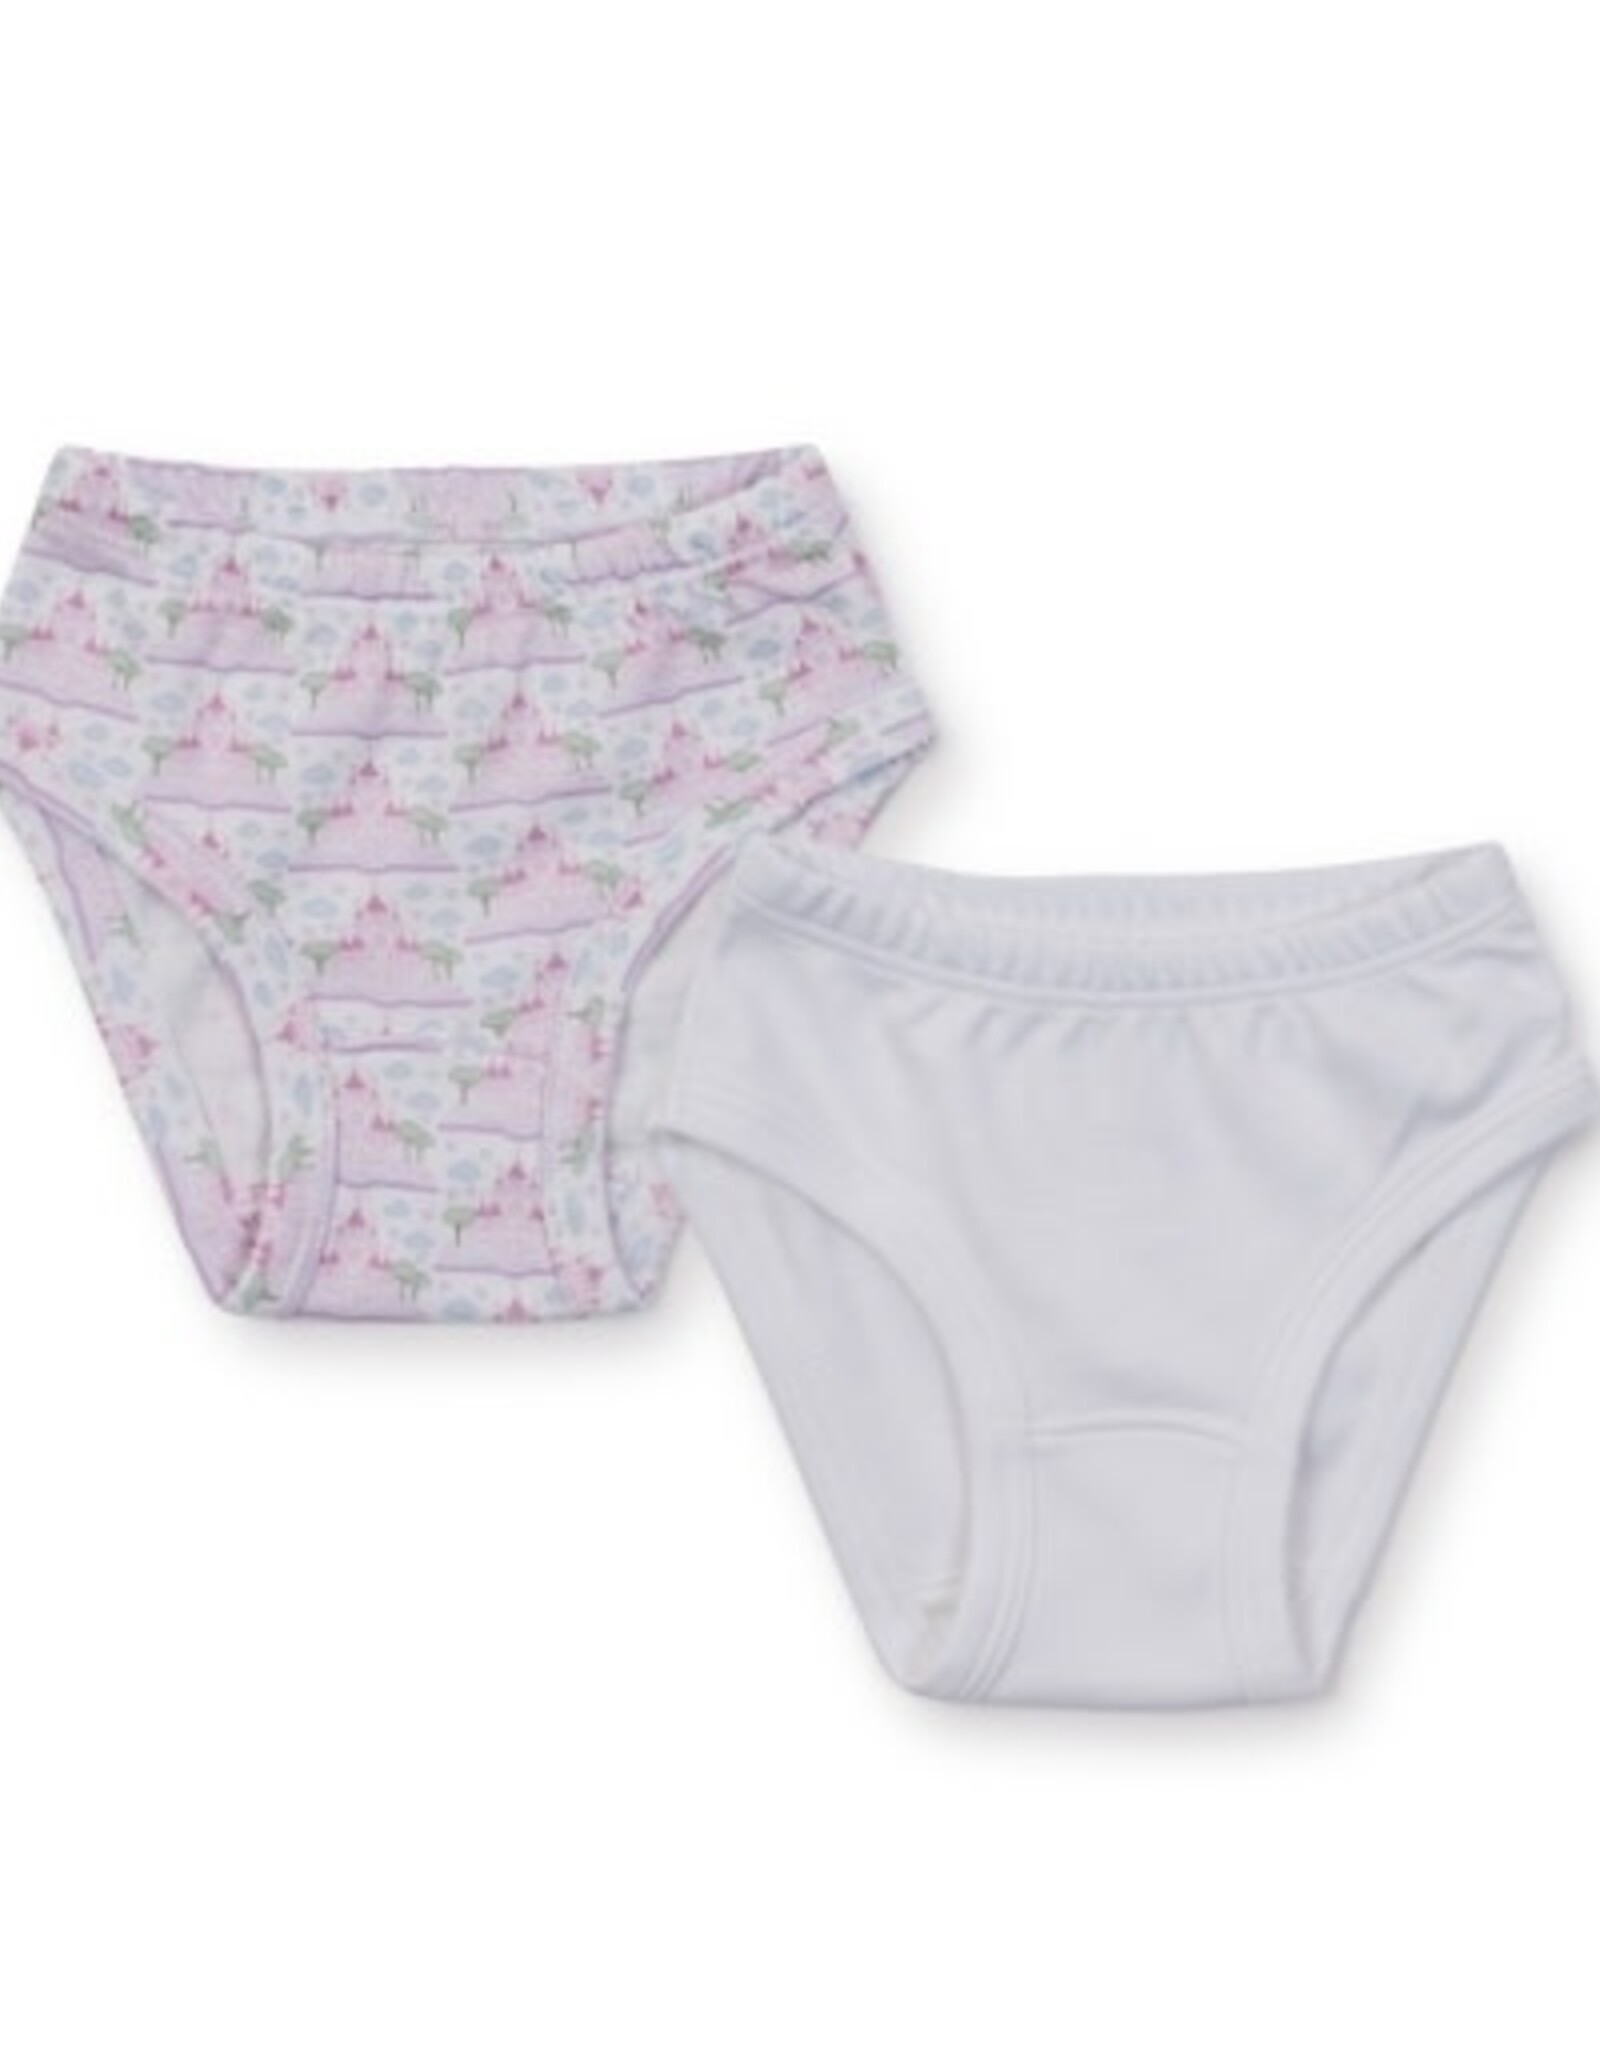 Lila + Hayes Lauren Underwear Set, Fairy Tales & White